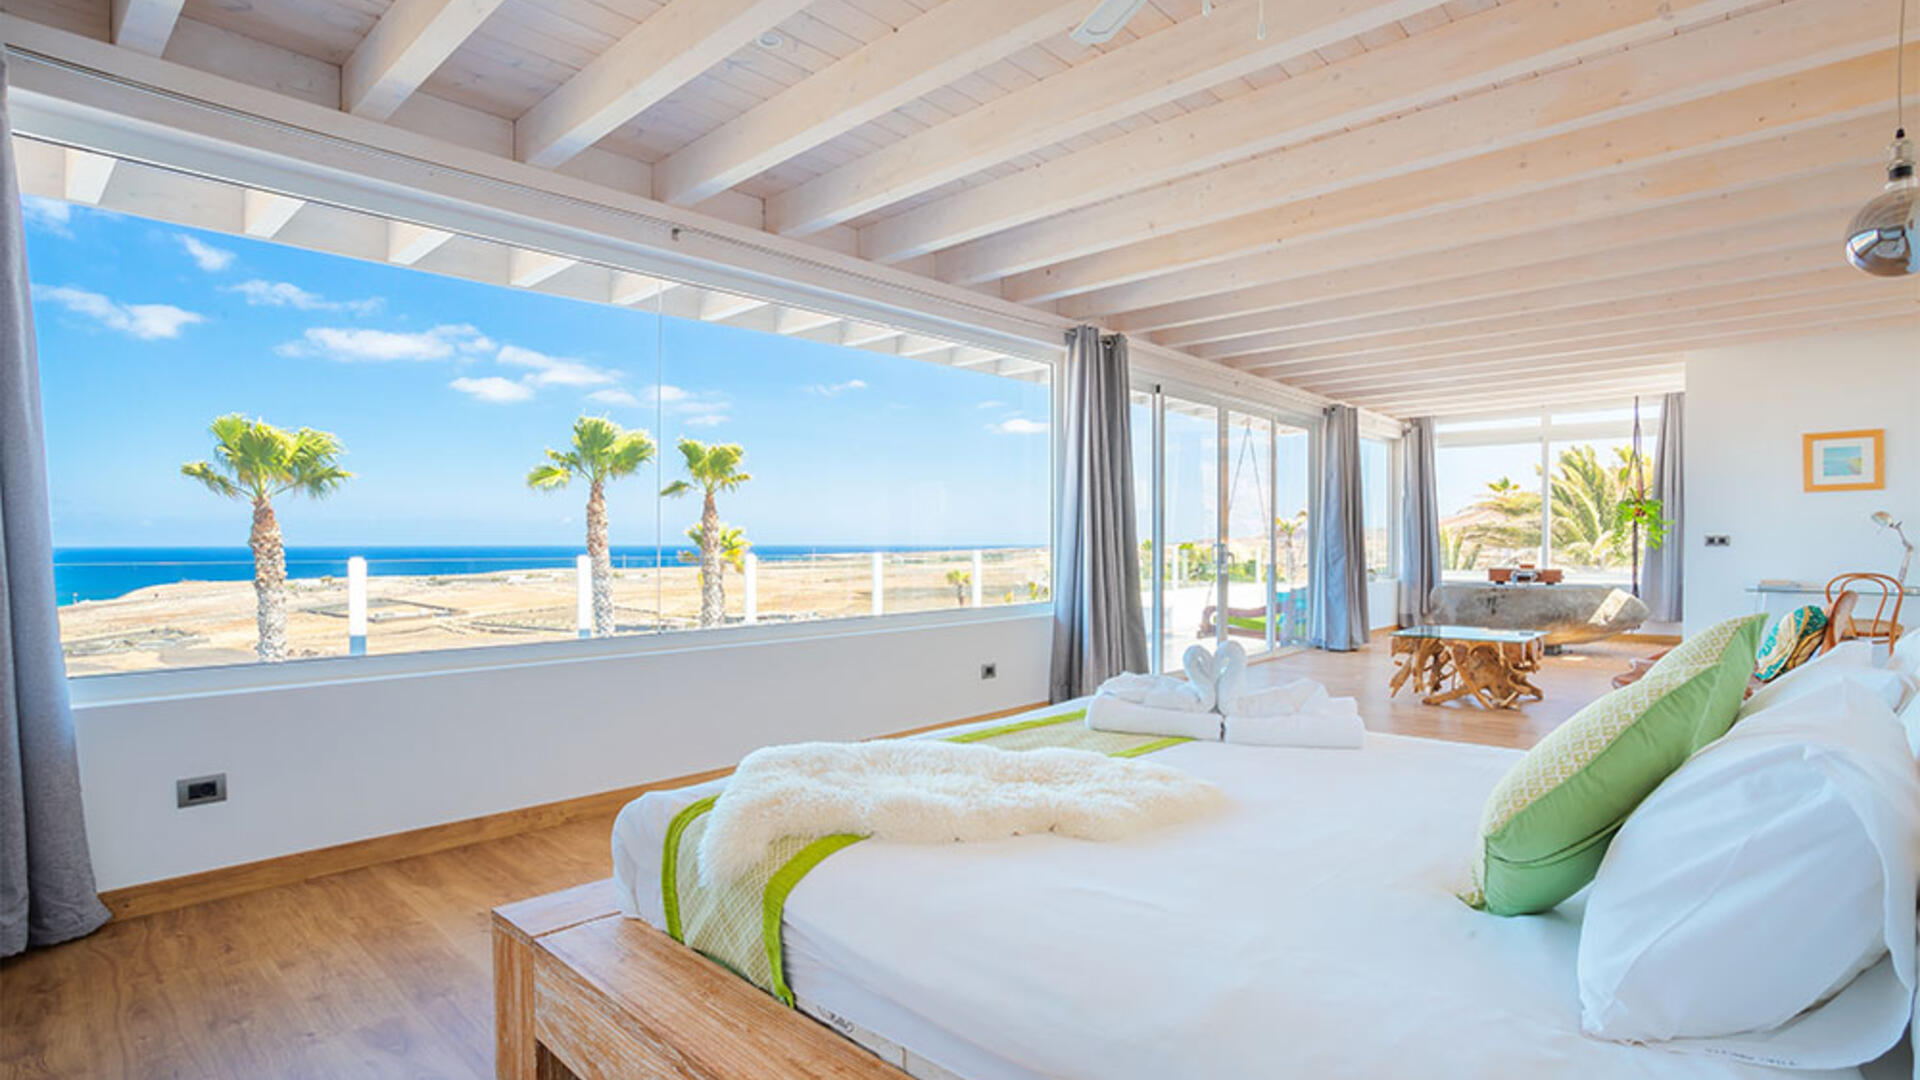 Stunning holiday villa in Lanzarote with ocean views